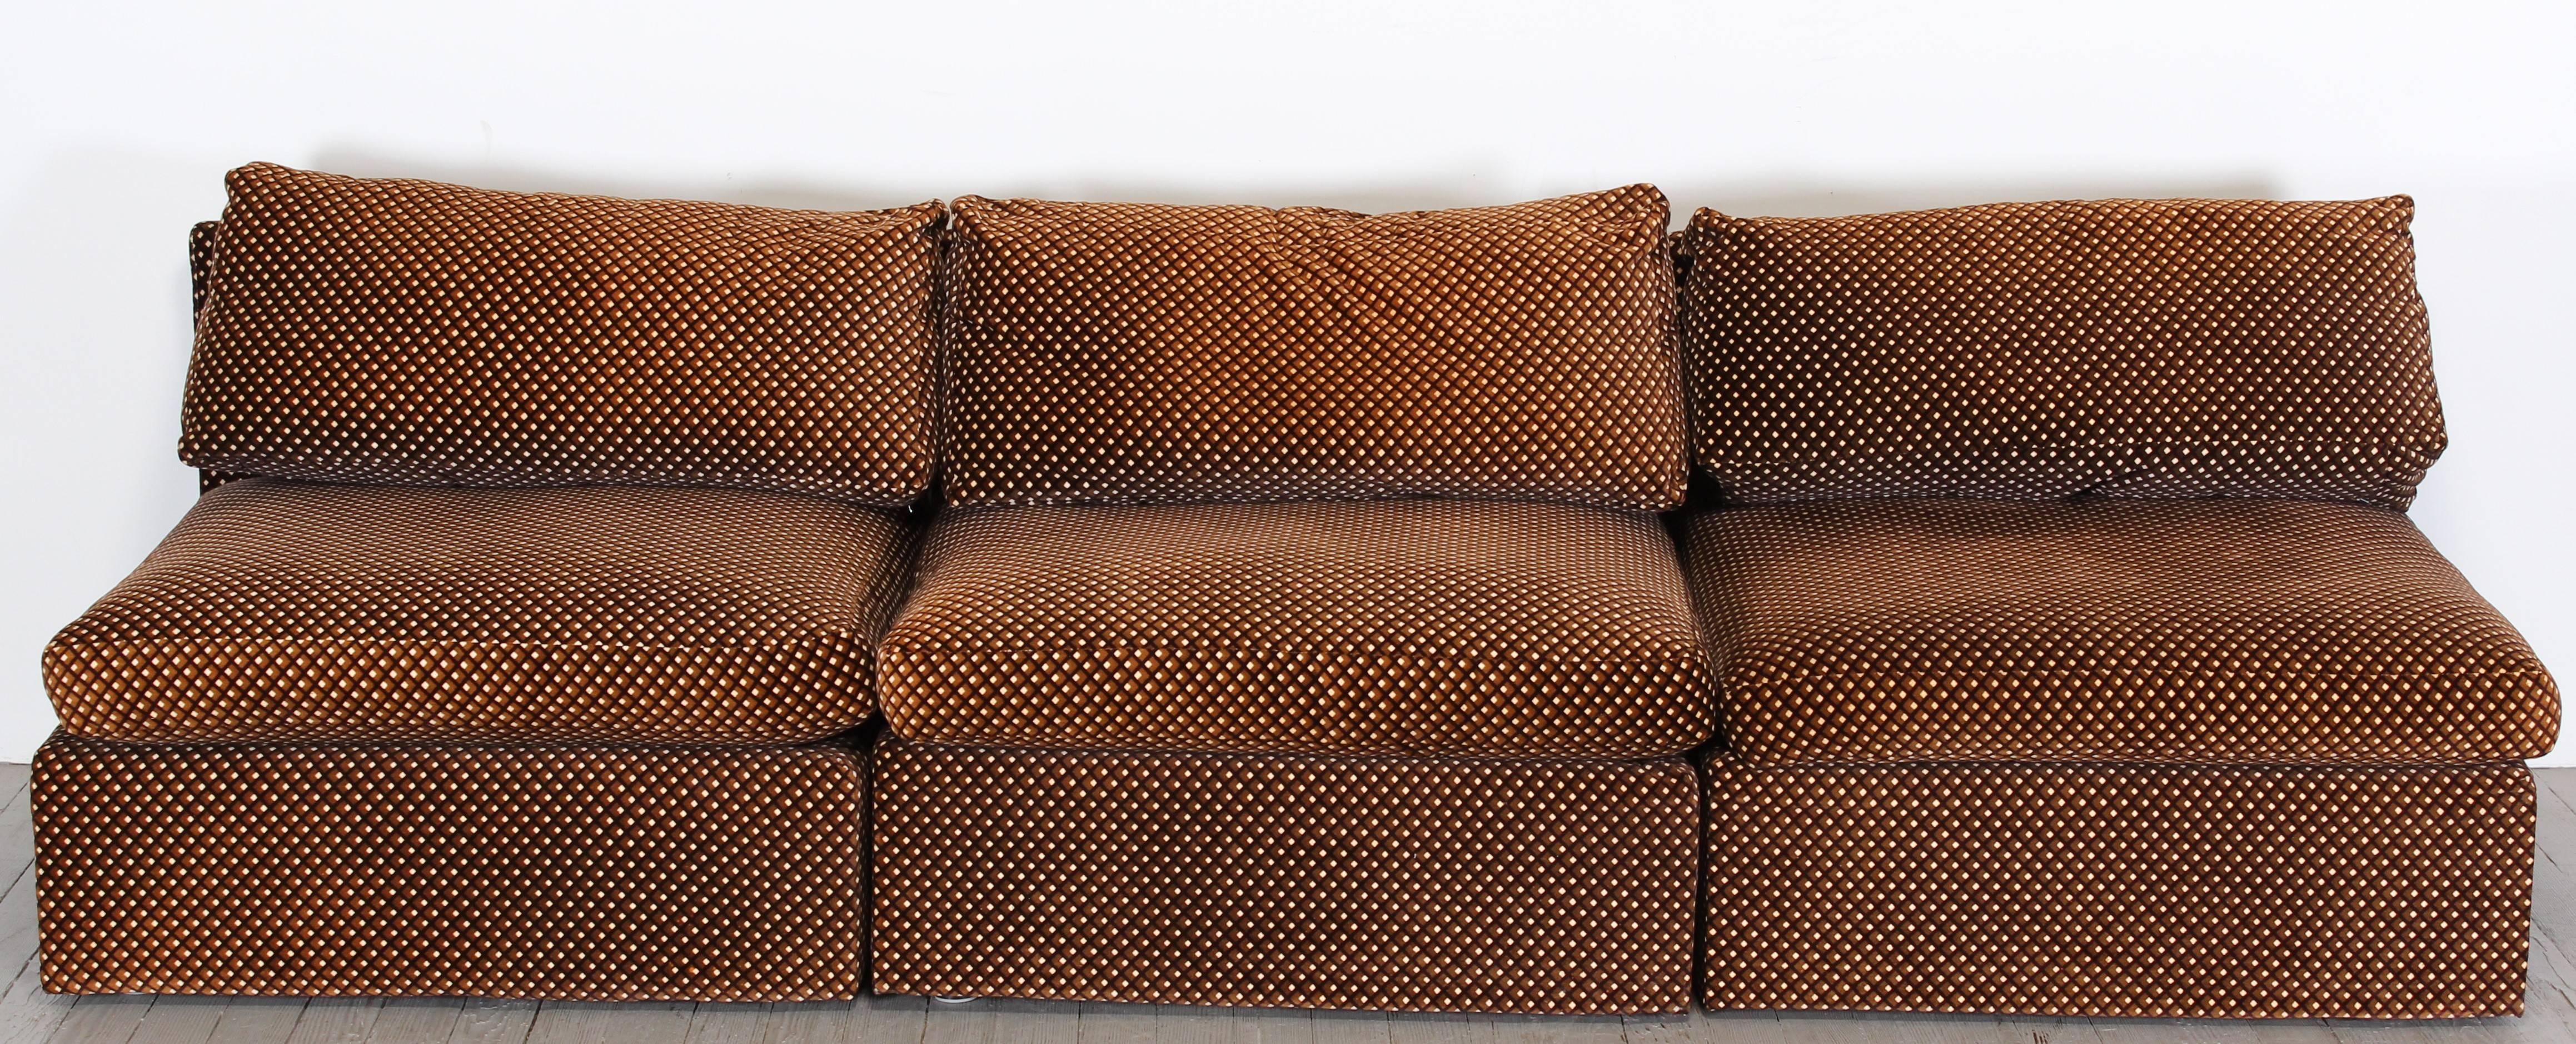 Upholstery Milo Baughman Sectional Sofa for Thayer Coggin, 1976